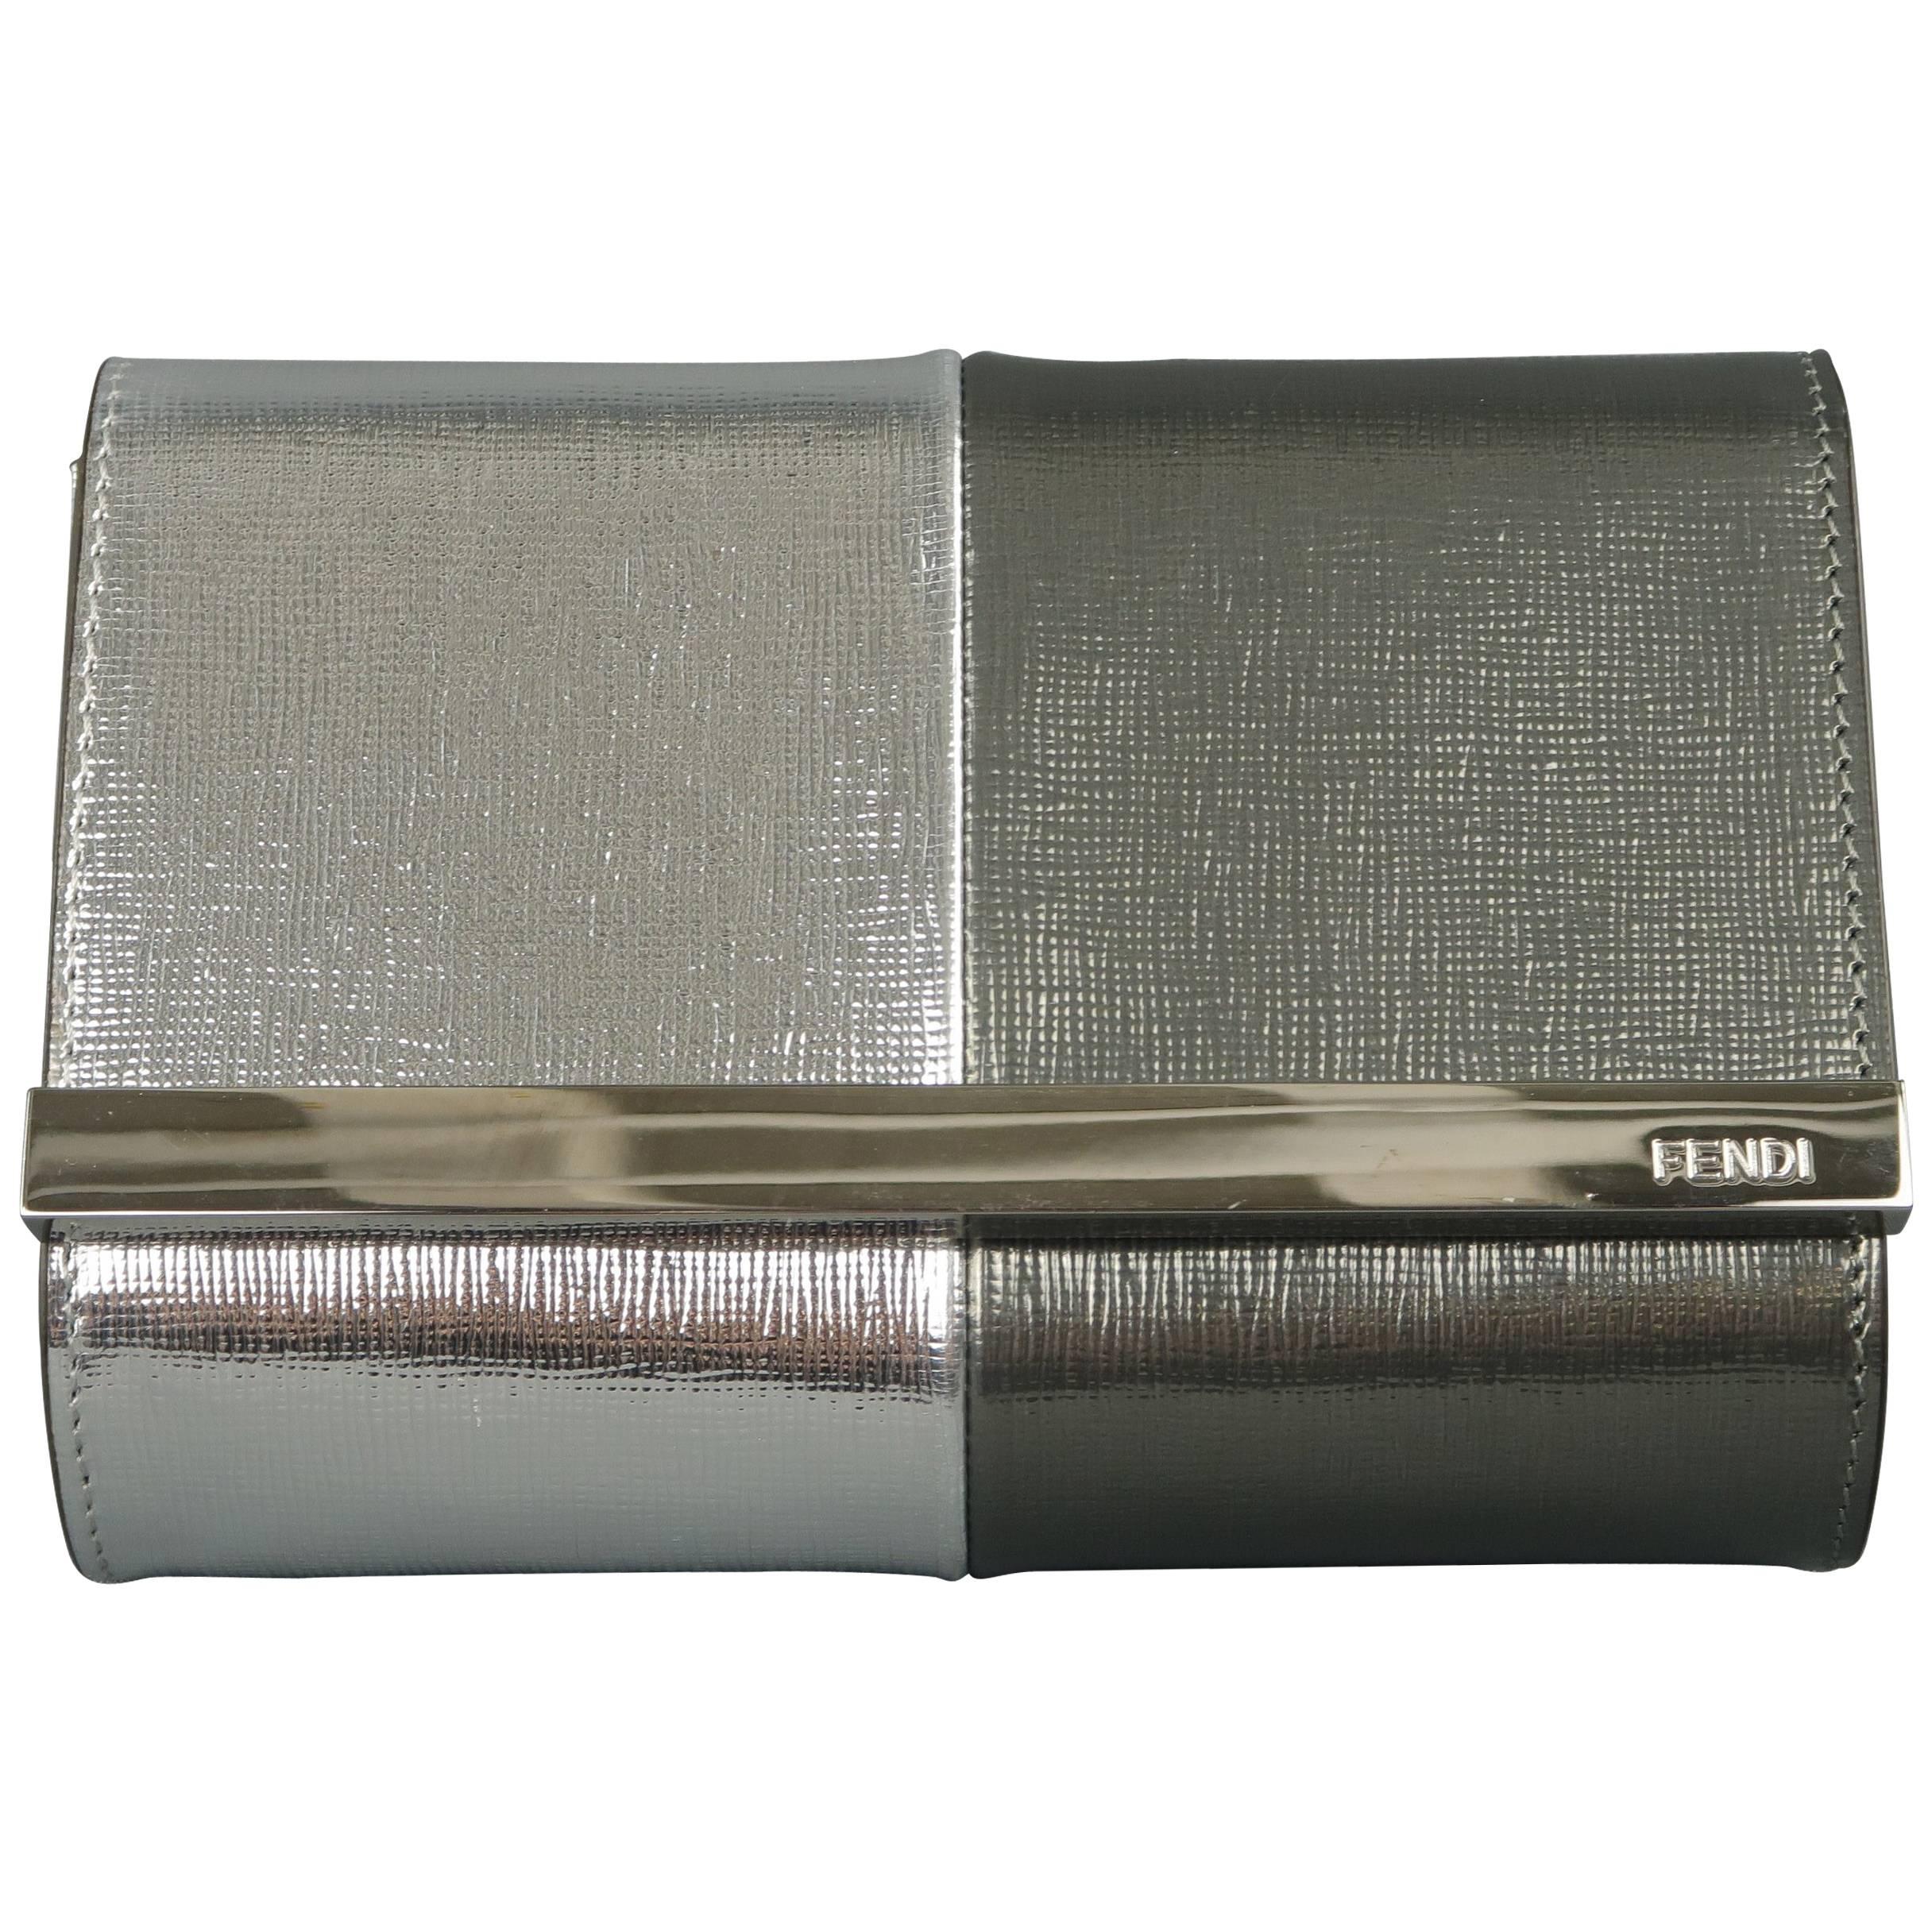 FENDI Two Tone Metallic Silver Leather Evening Mini Rush Clutch Handbag